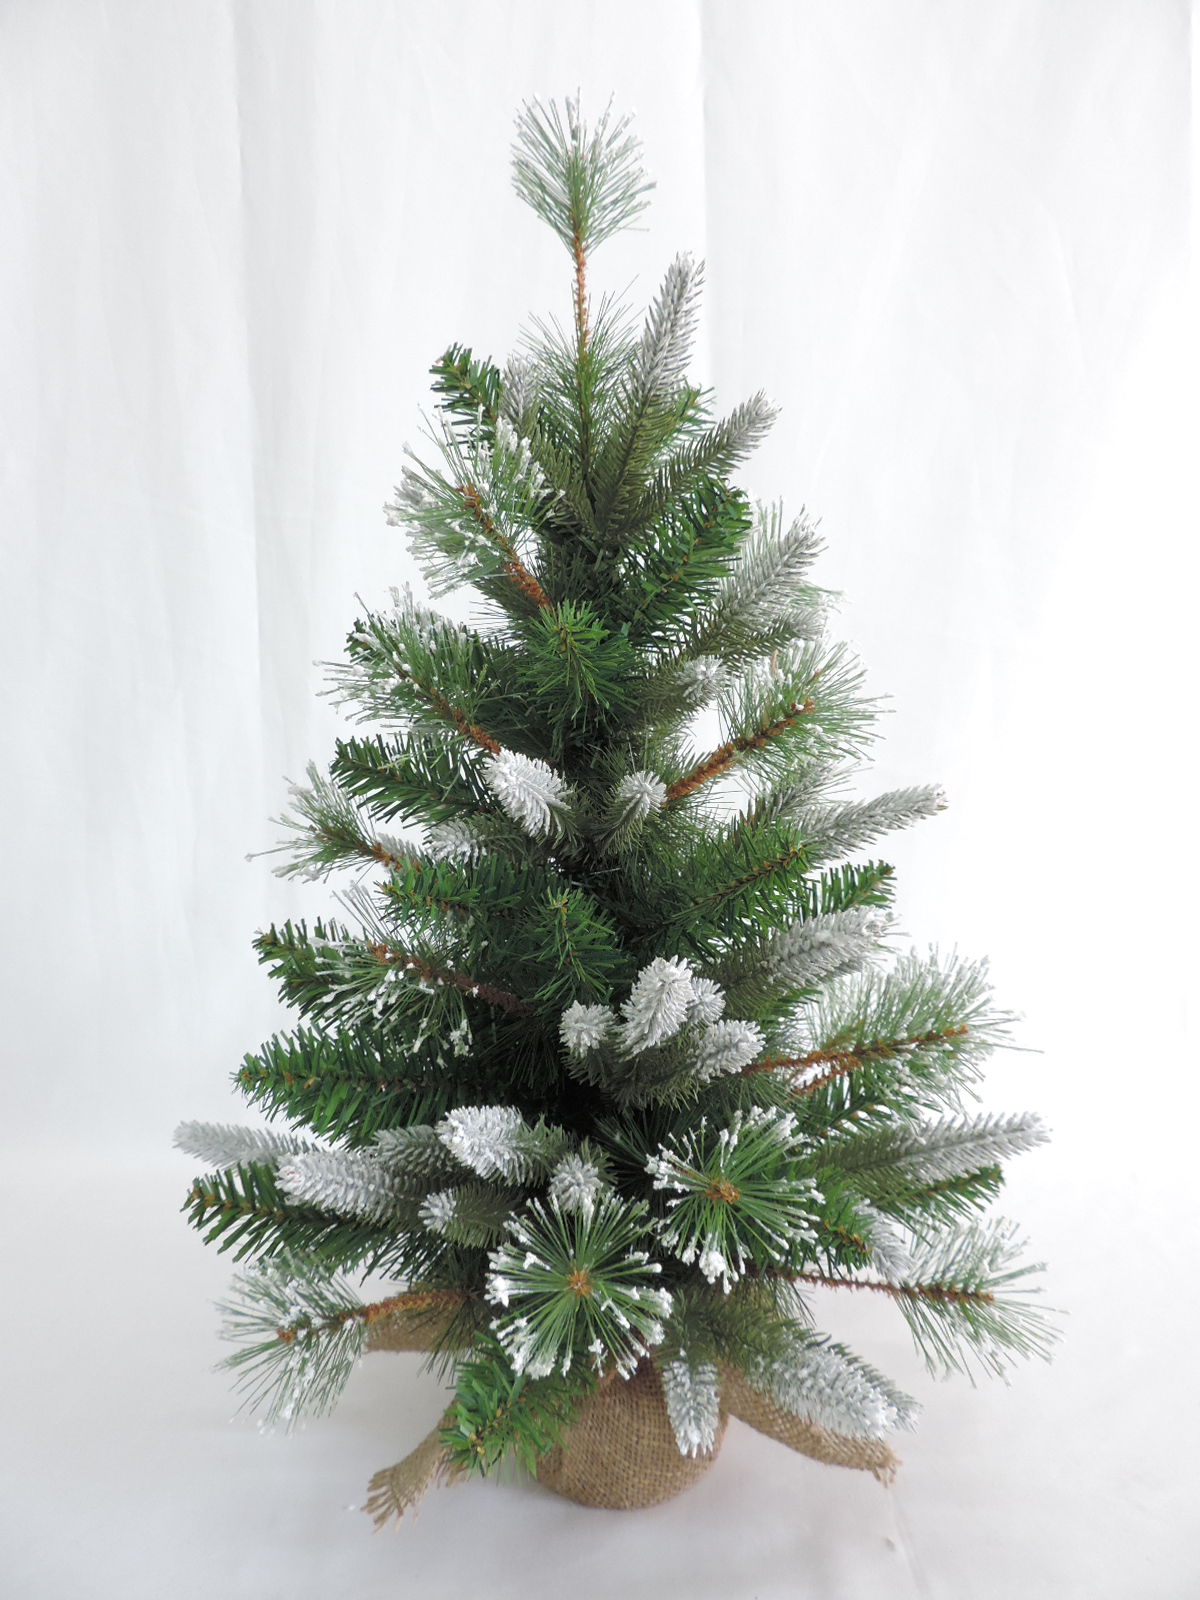 artificial Christmas tree